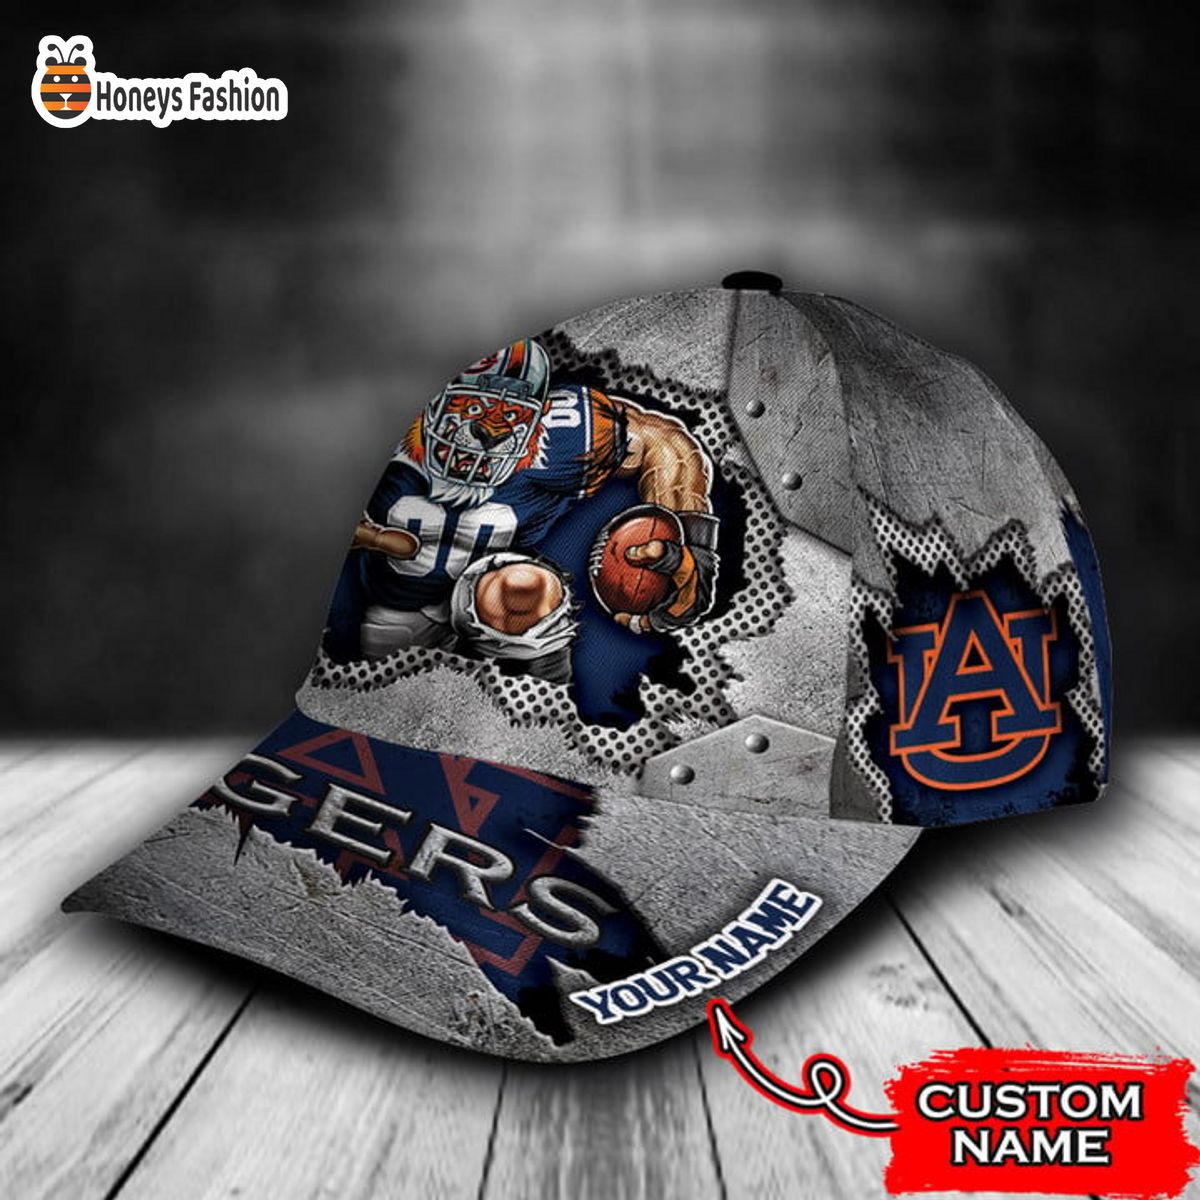 Auburn Tigers mascot custom name classic cap